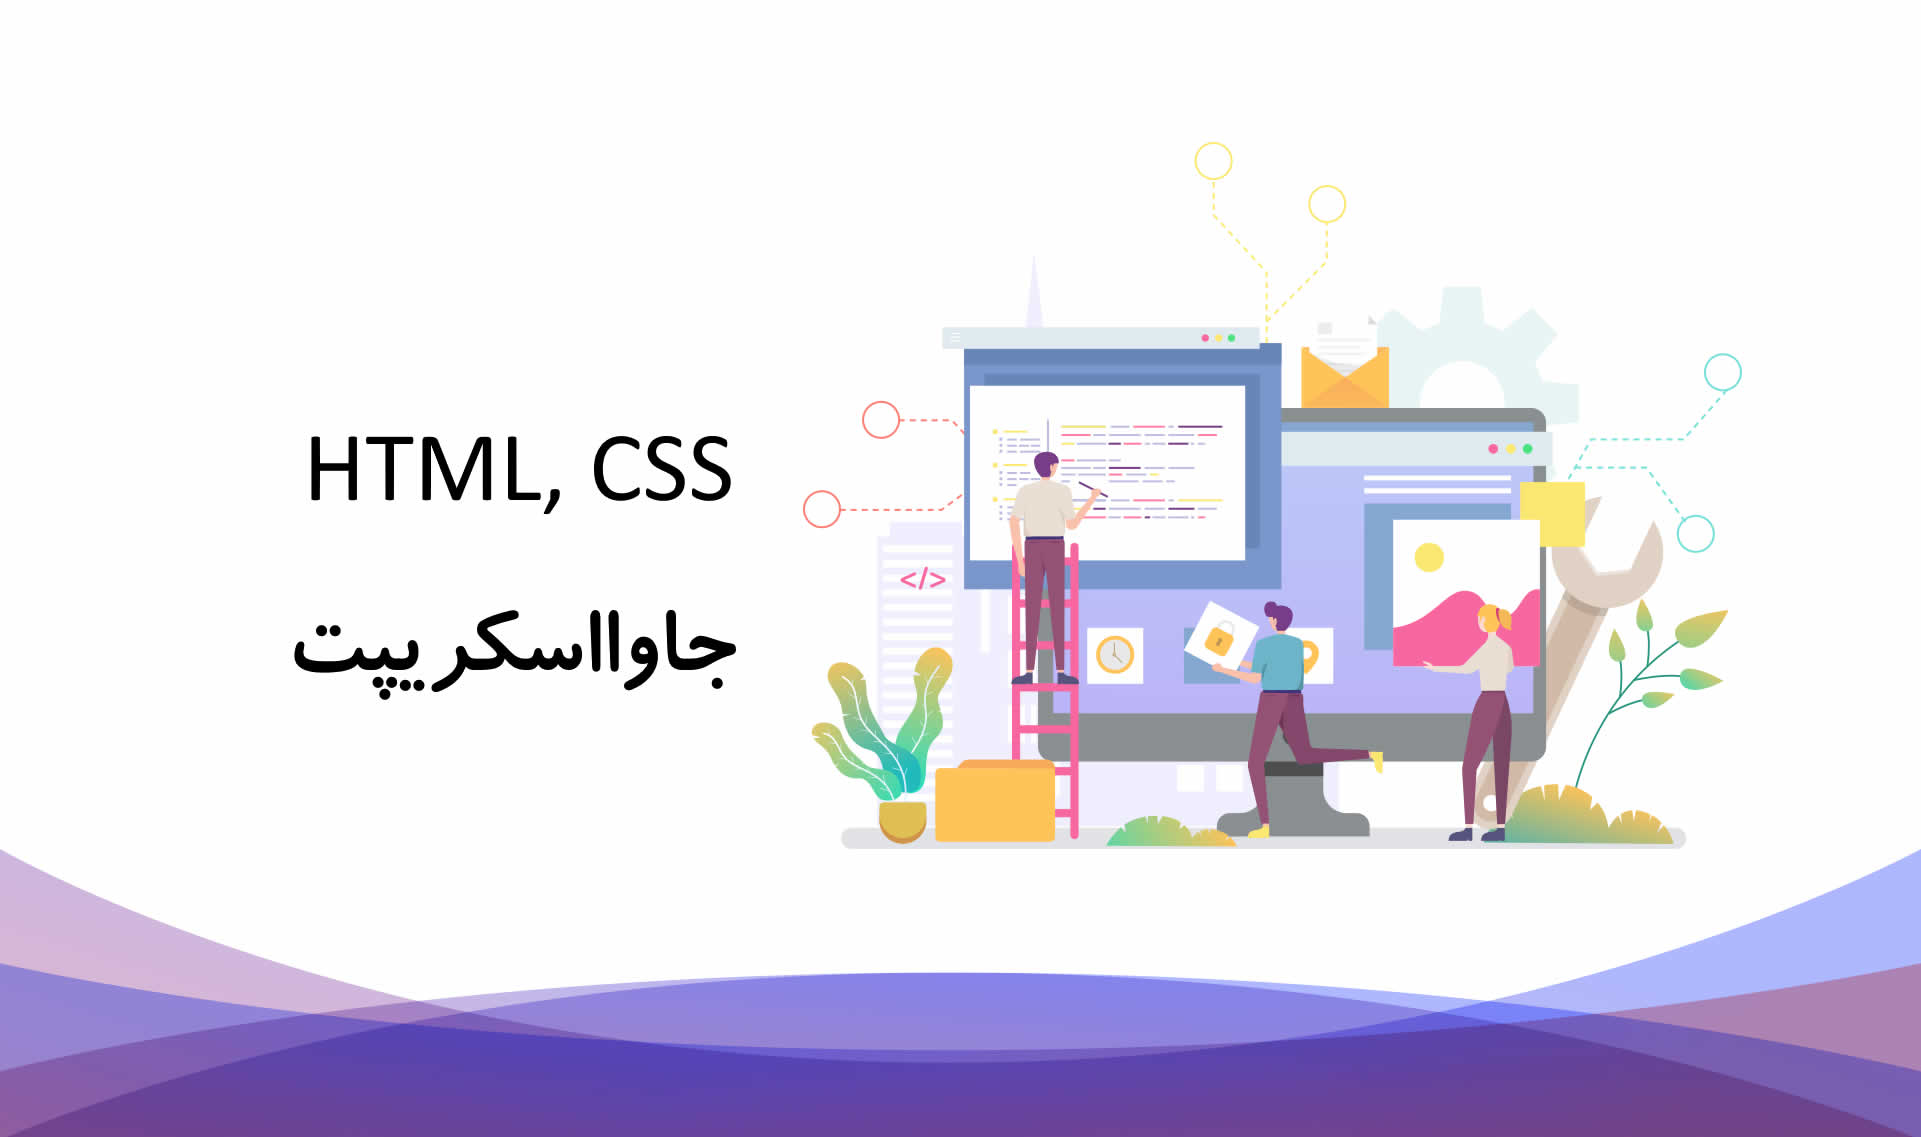 HTML, CSS و جاوااسکریپت، سه هسته و عنصر اصلی طراحی وب